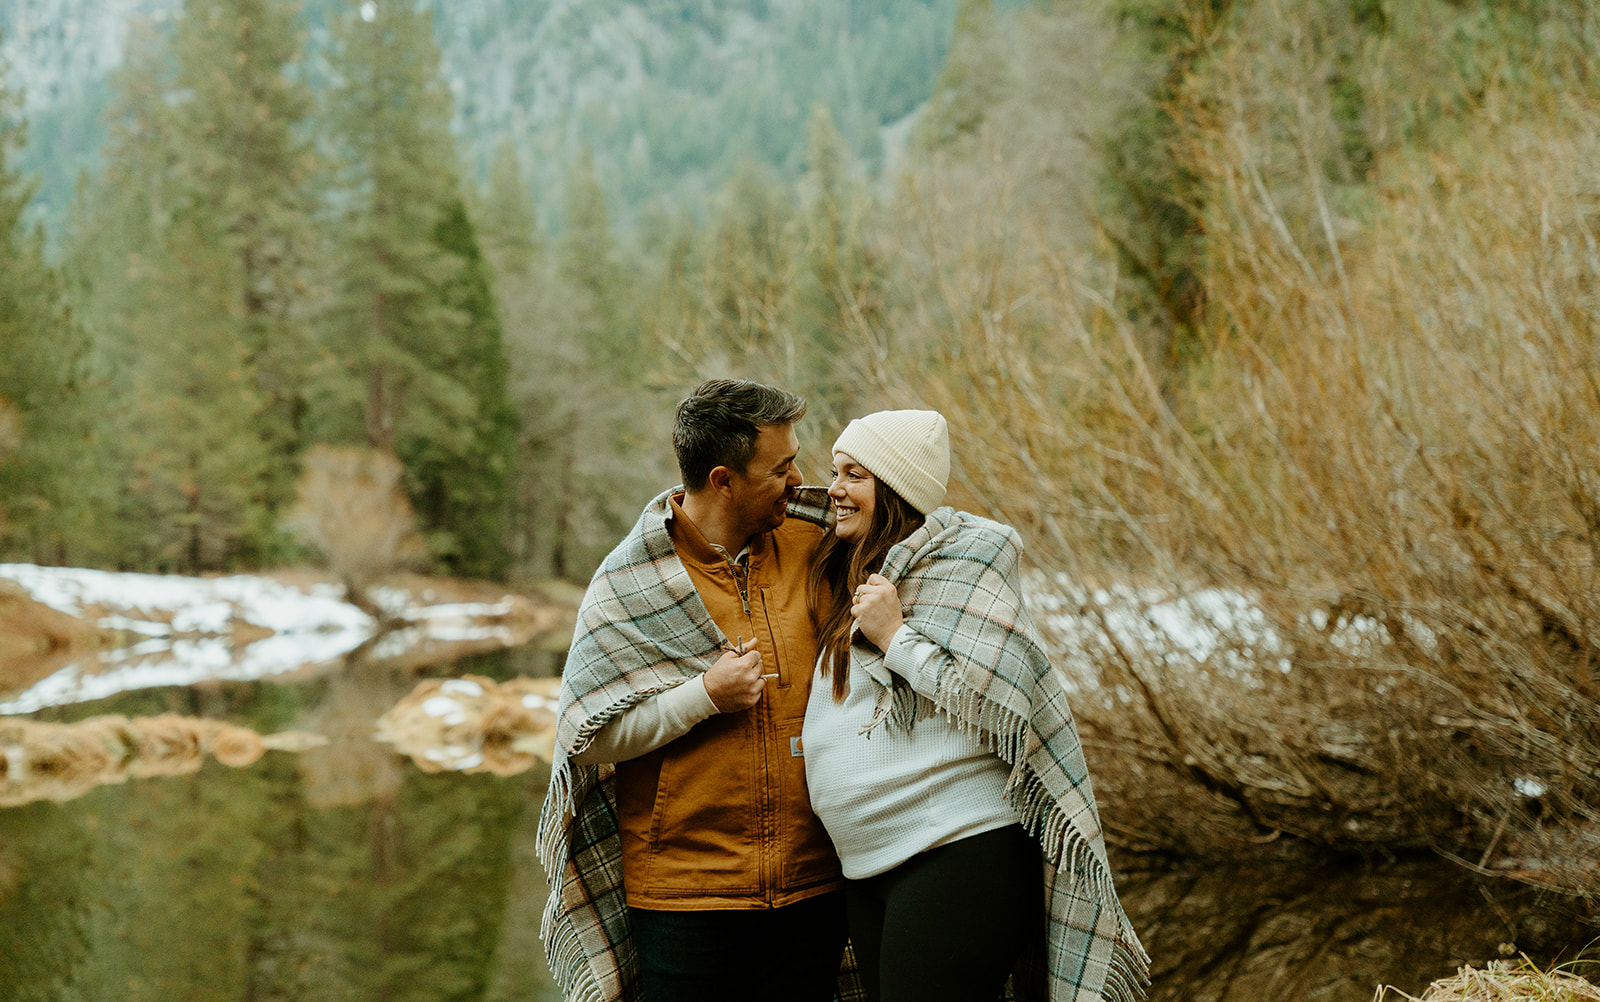 Yosemite wedding photographer captures couple cuddling under blanket in Yosemite park